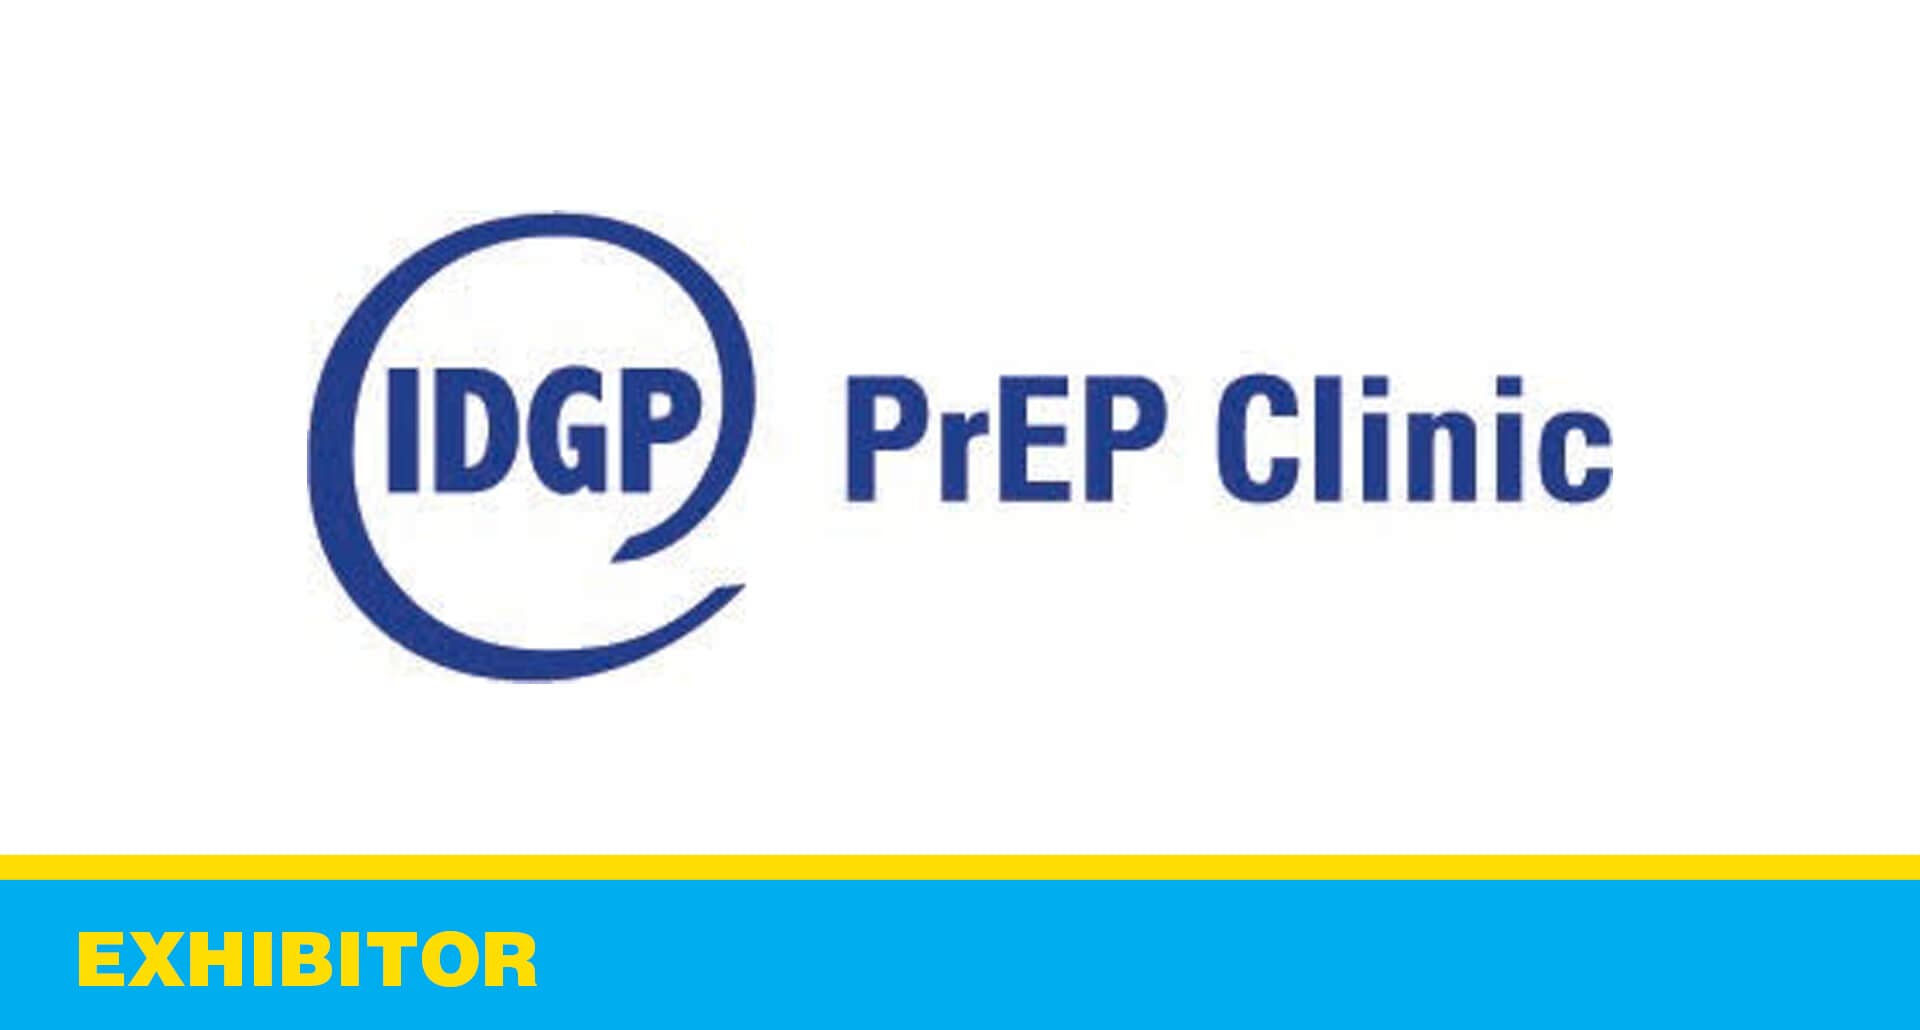 University of Colorado Hospital IDGP PrEP Clinic